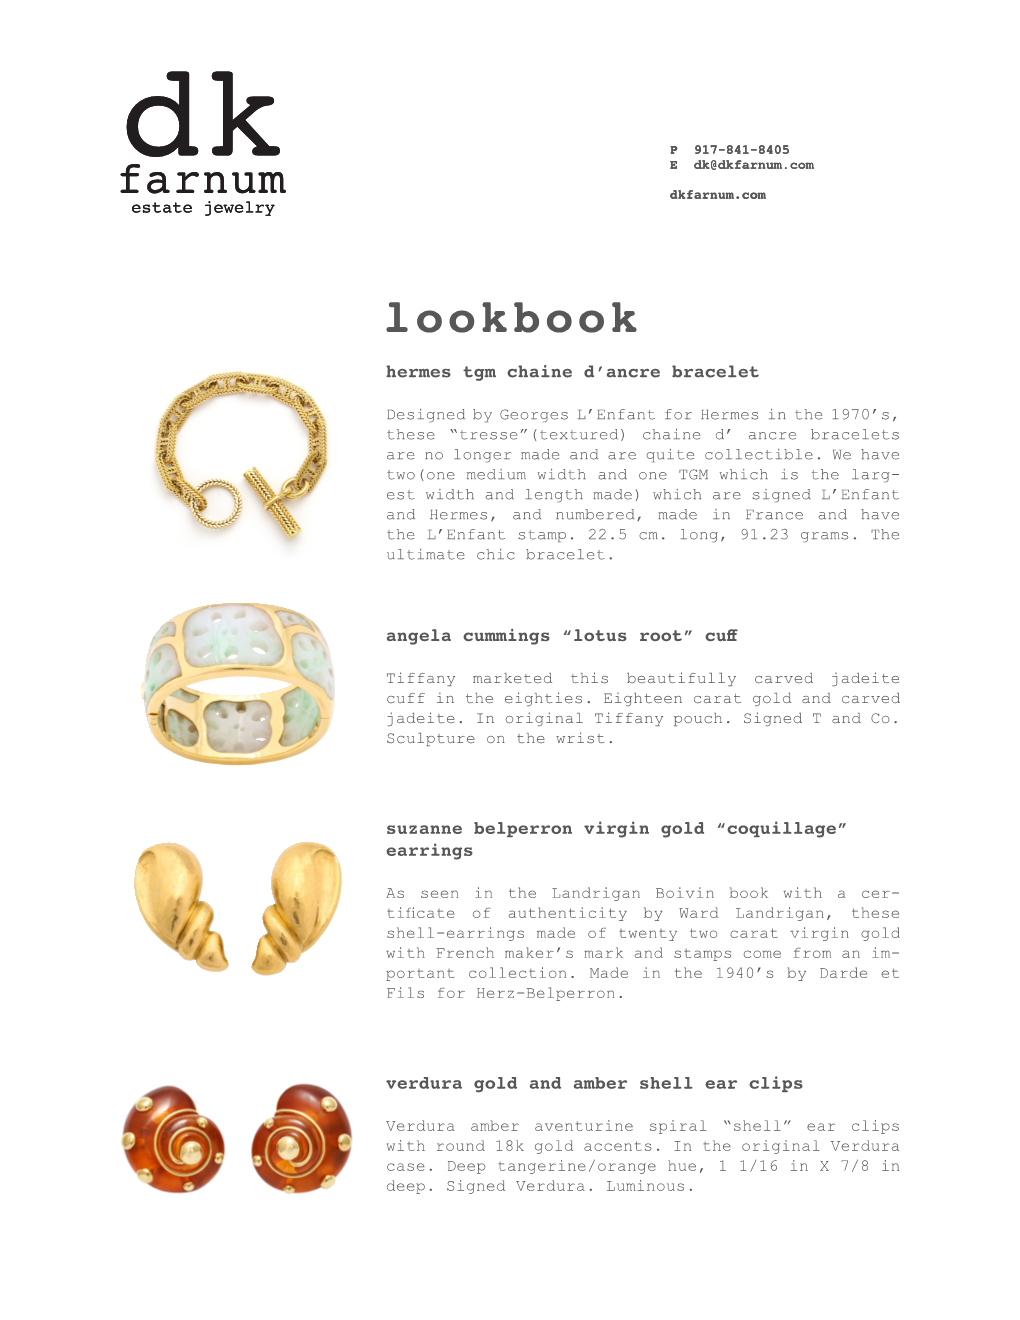 DK Farnum Estate Jewelry Lookbook